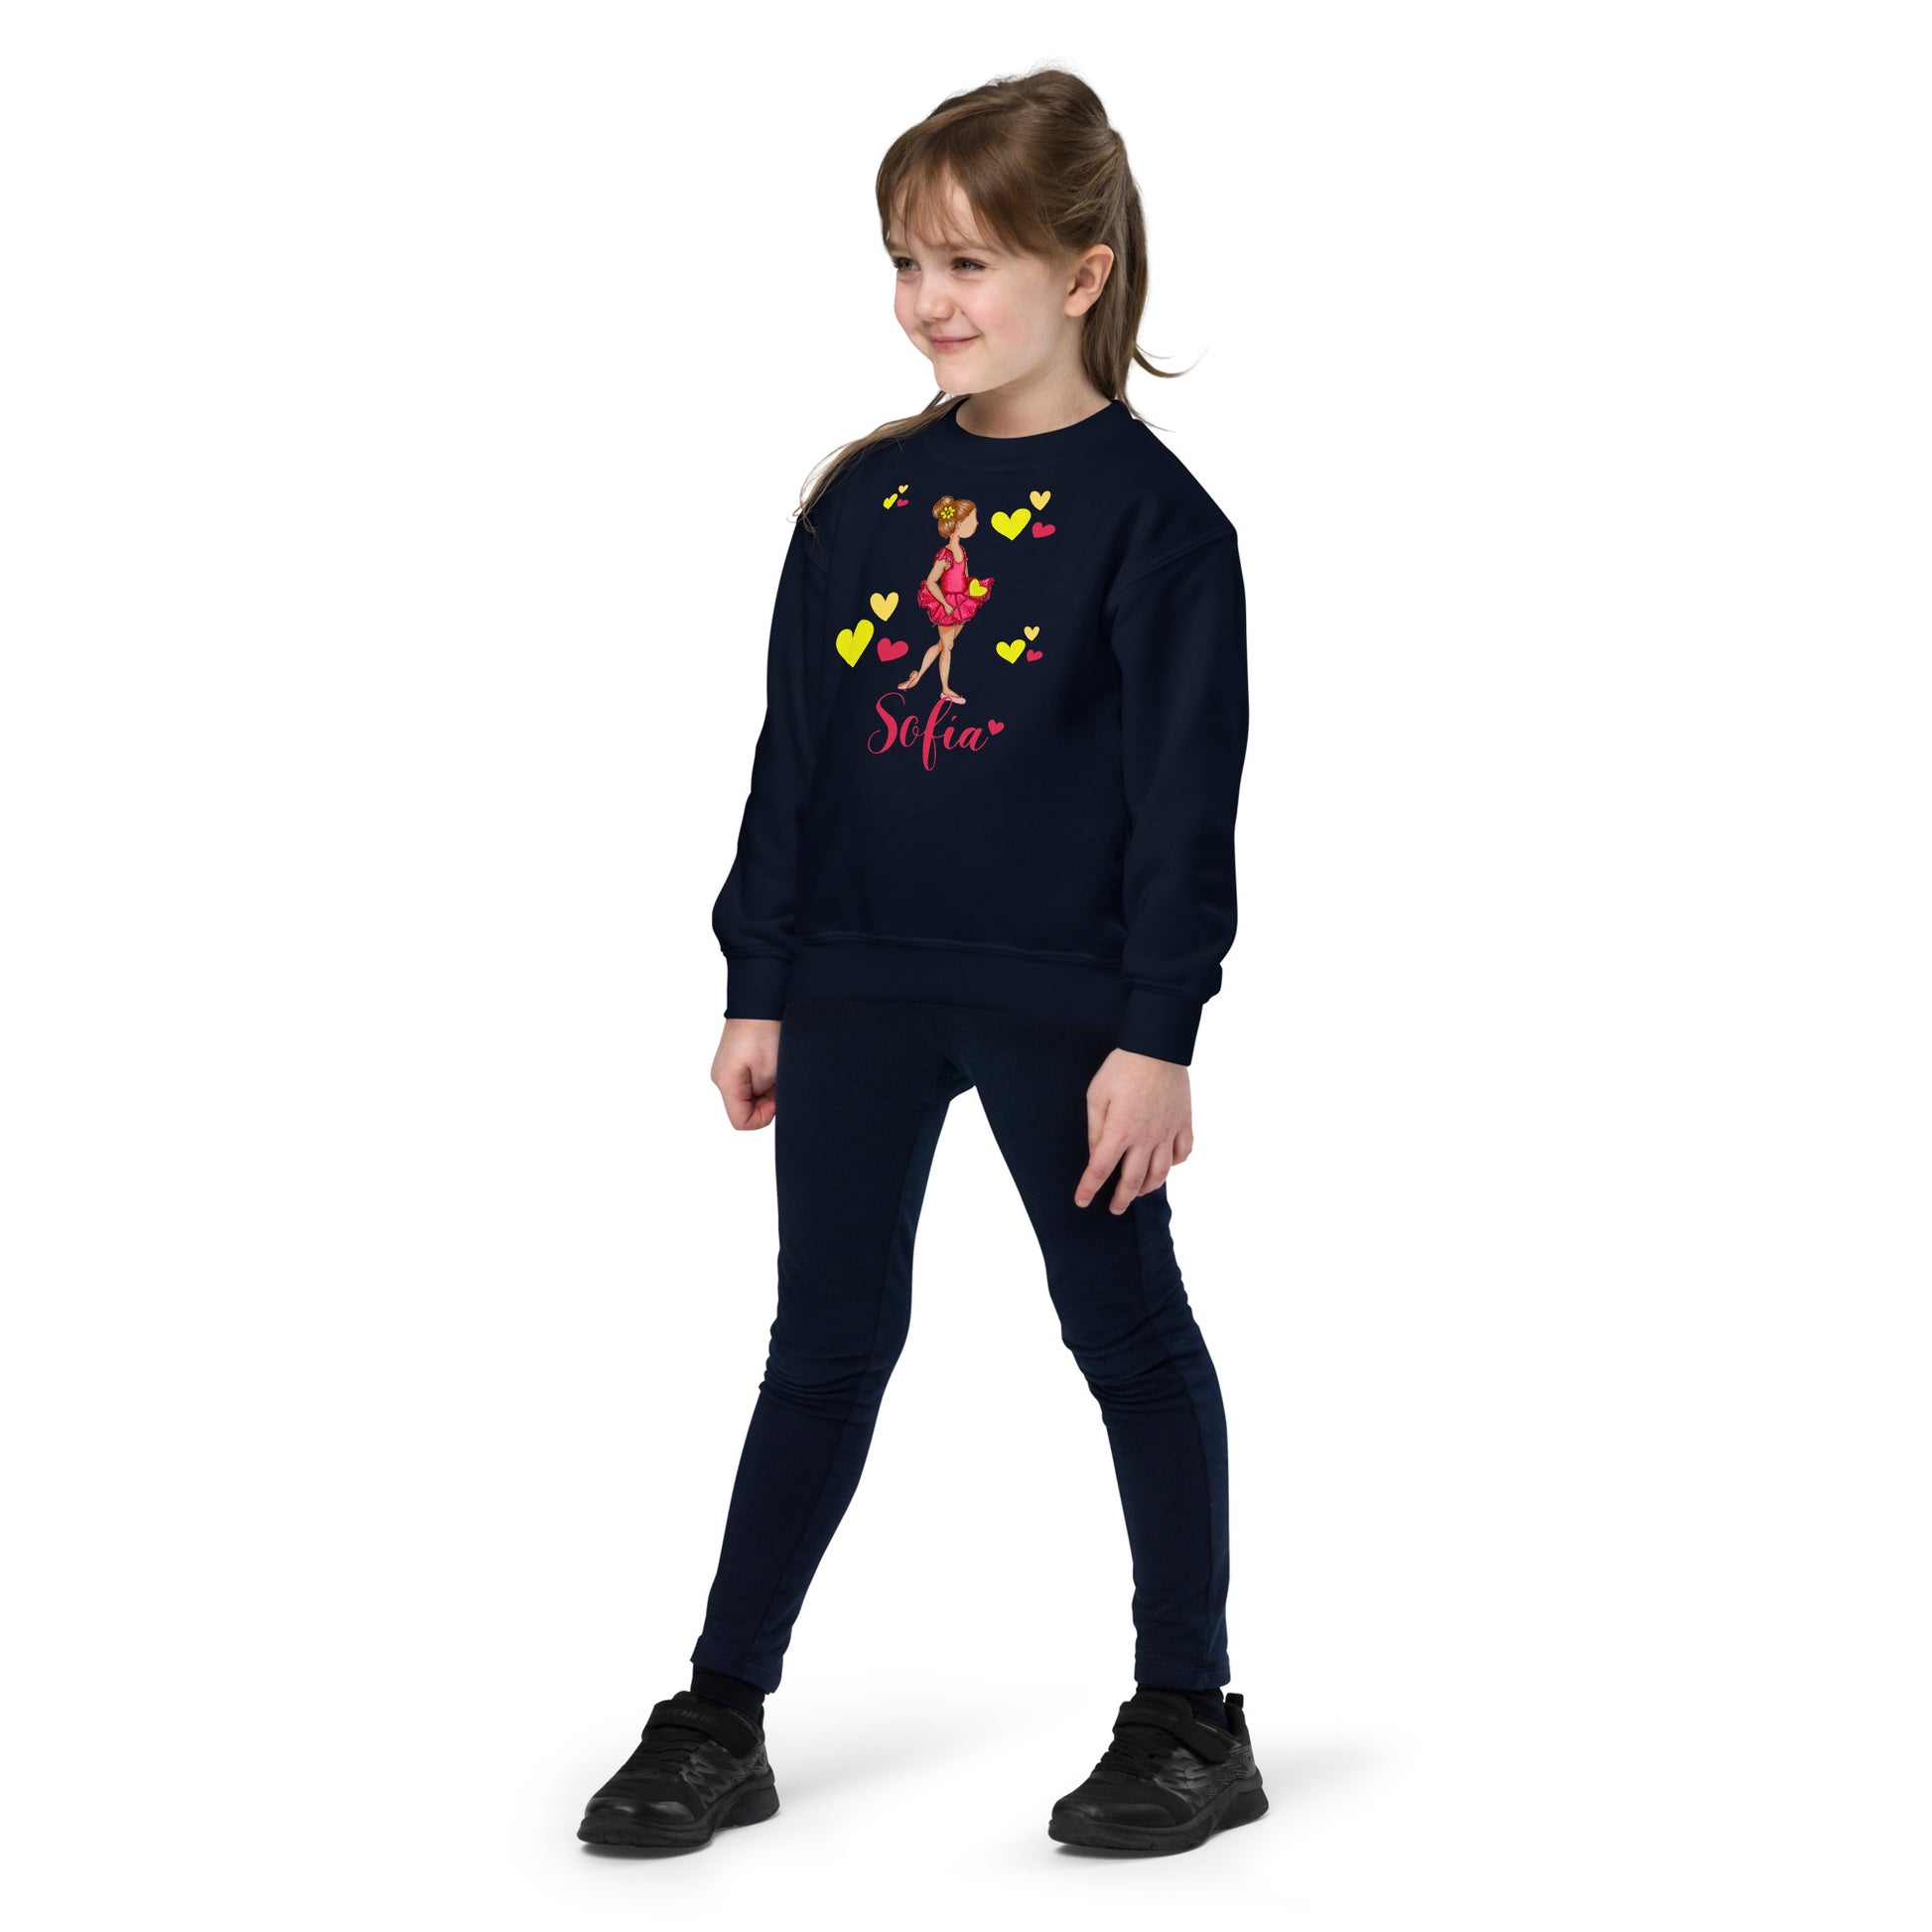 a young girl wearing a sweatshirt and leggings